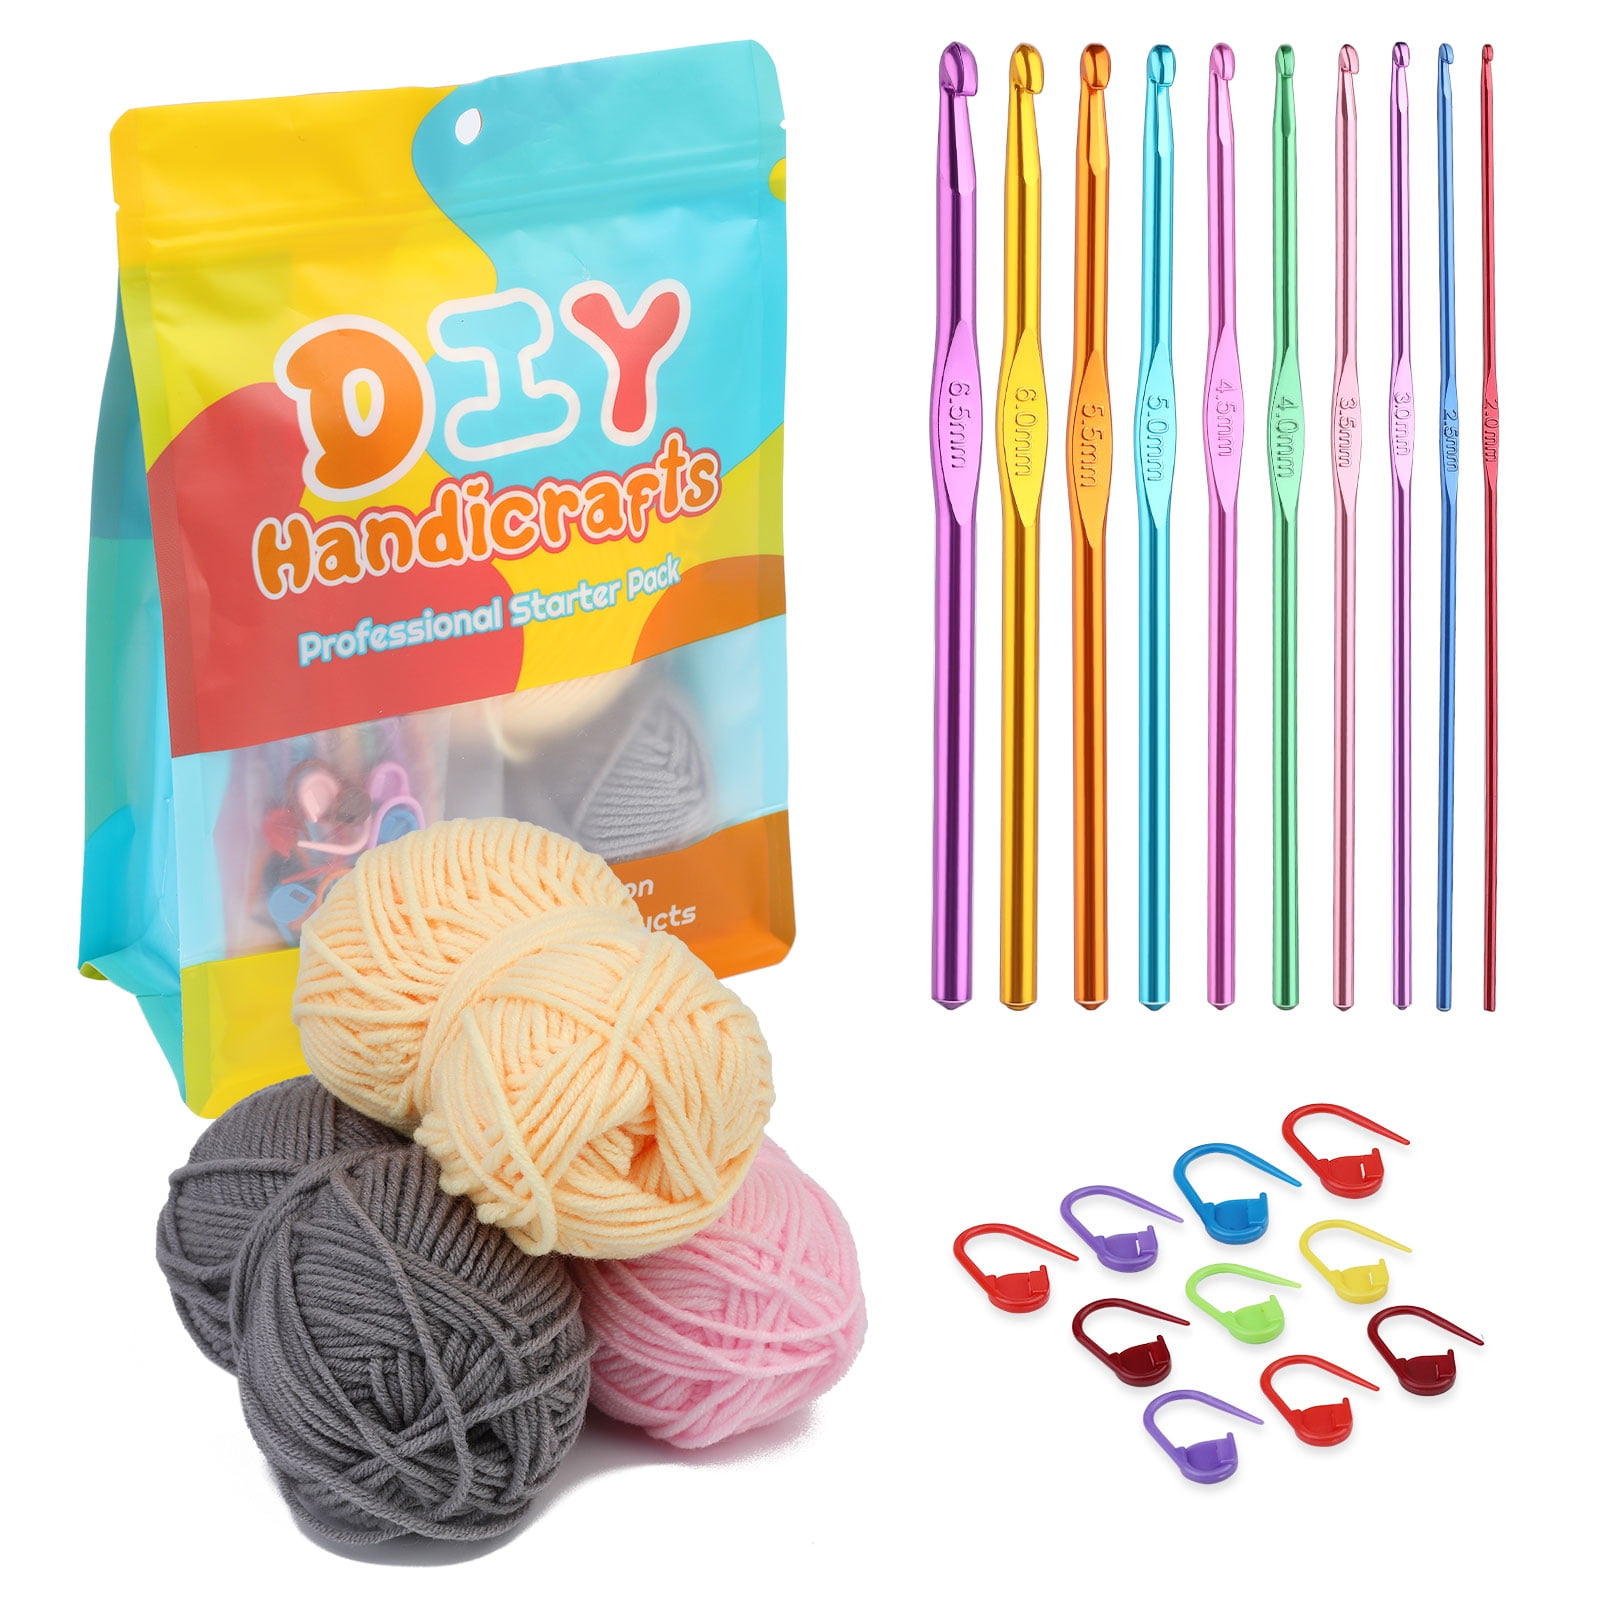 Crochet Starter Kit with Yarn Set – JumblCrafts